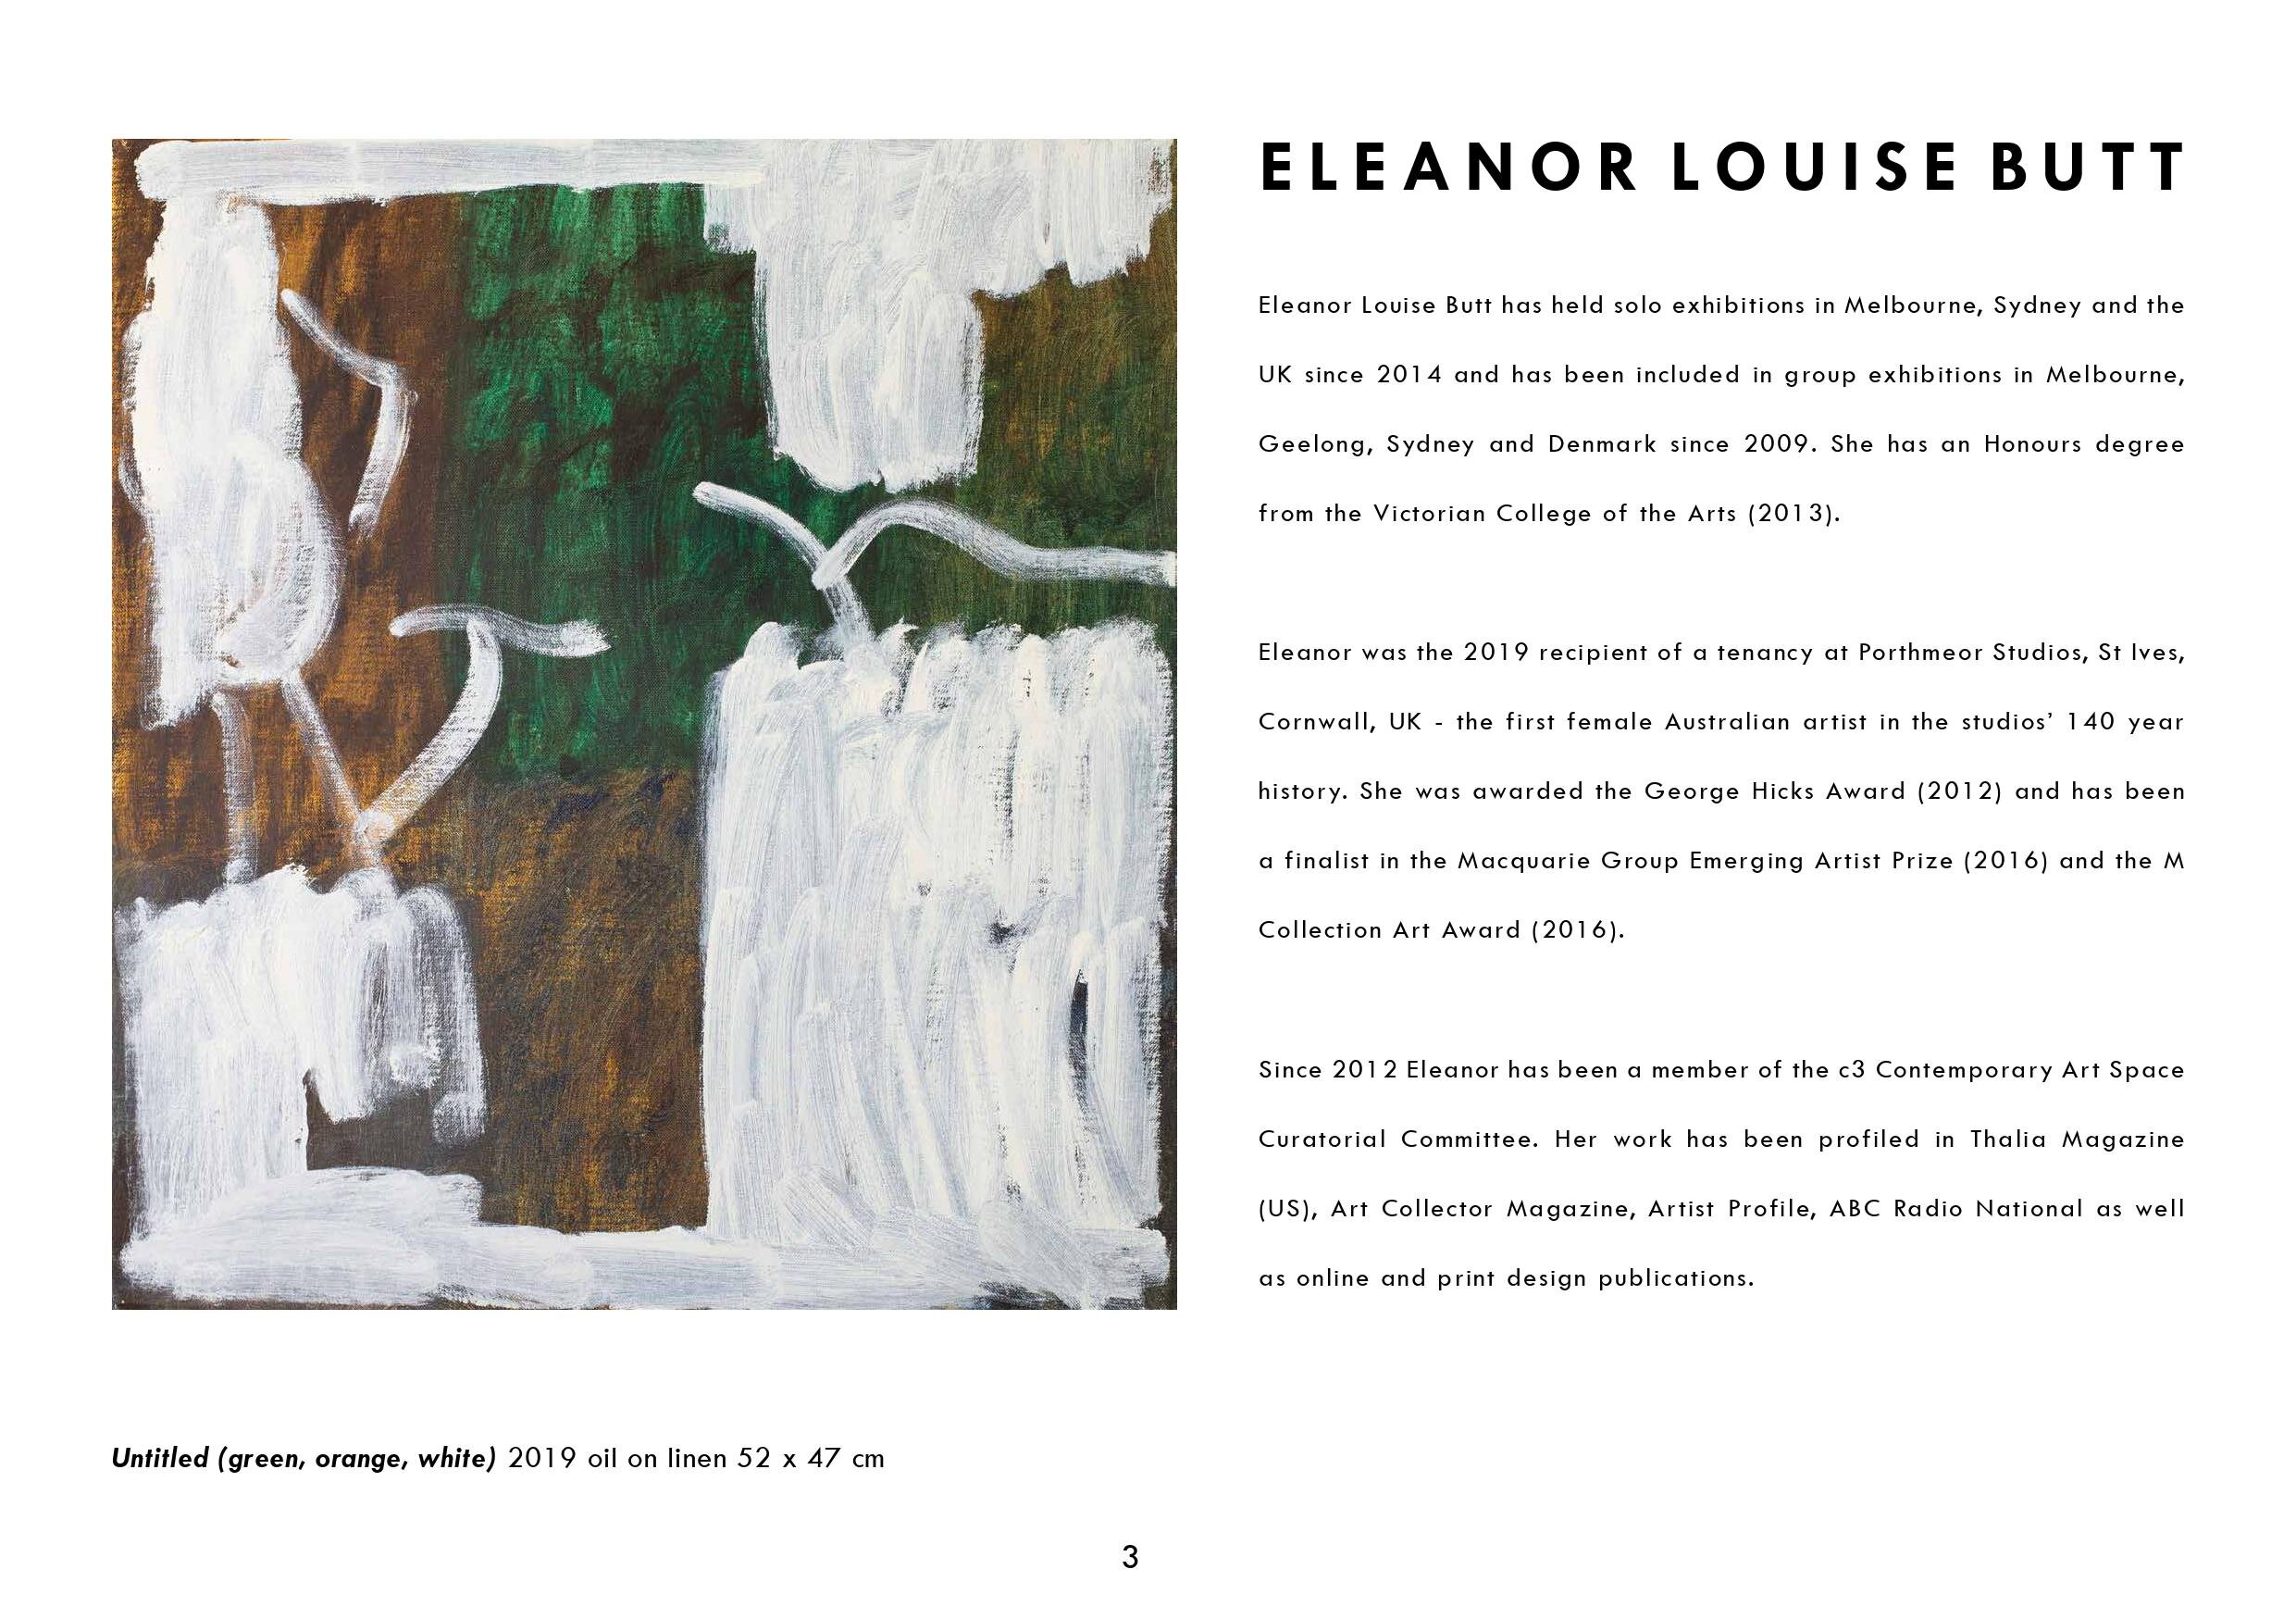 Eleanor Louise Butt Porthmeor Studio 5 Paintings Nicholas Thompson Gallery 2020 0003.jpg